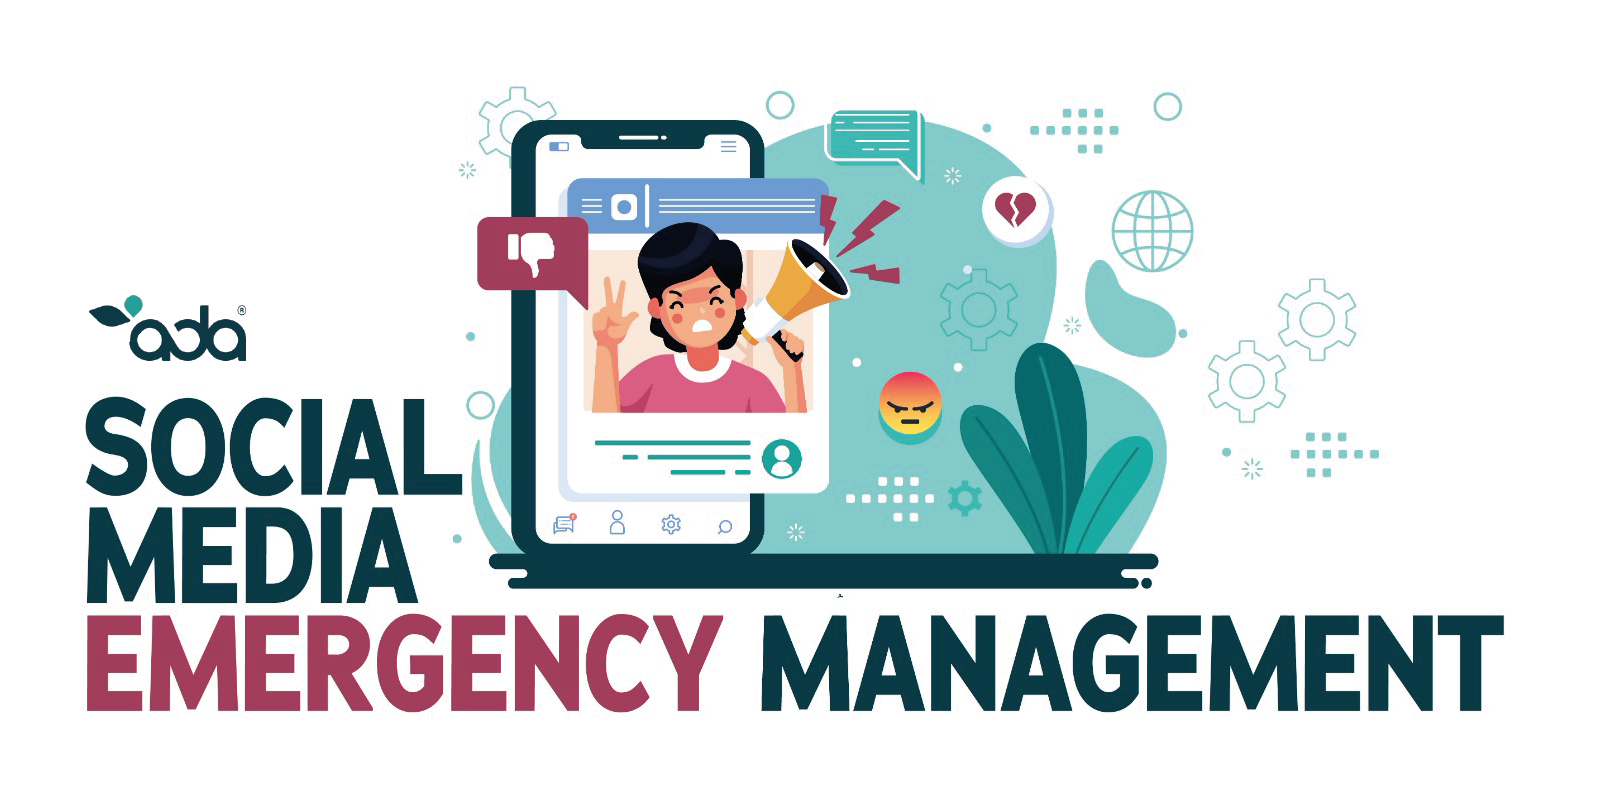 ada on cloud social media emergency management